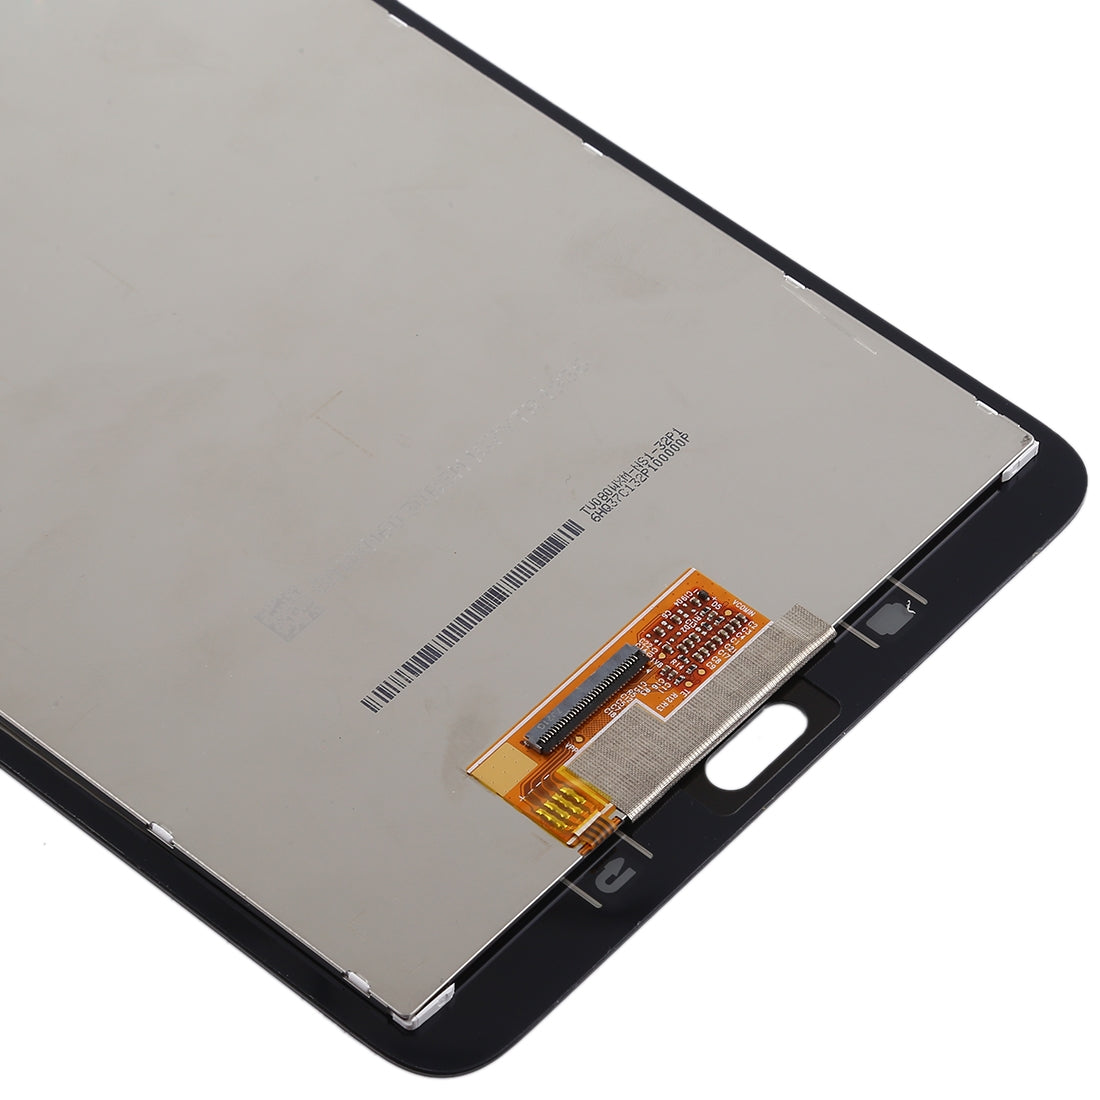 LCD + Touch Screen Samsung Galaxy Tab E 8.0 T377 (Wifi Version) Black